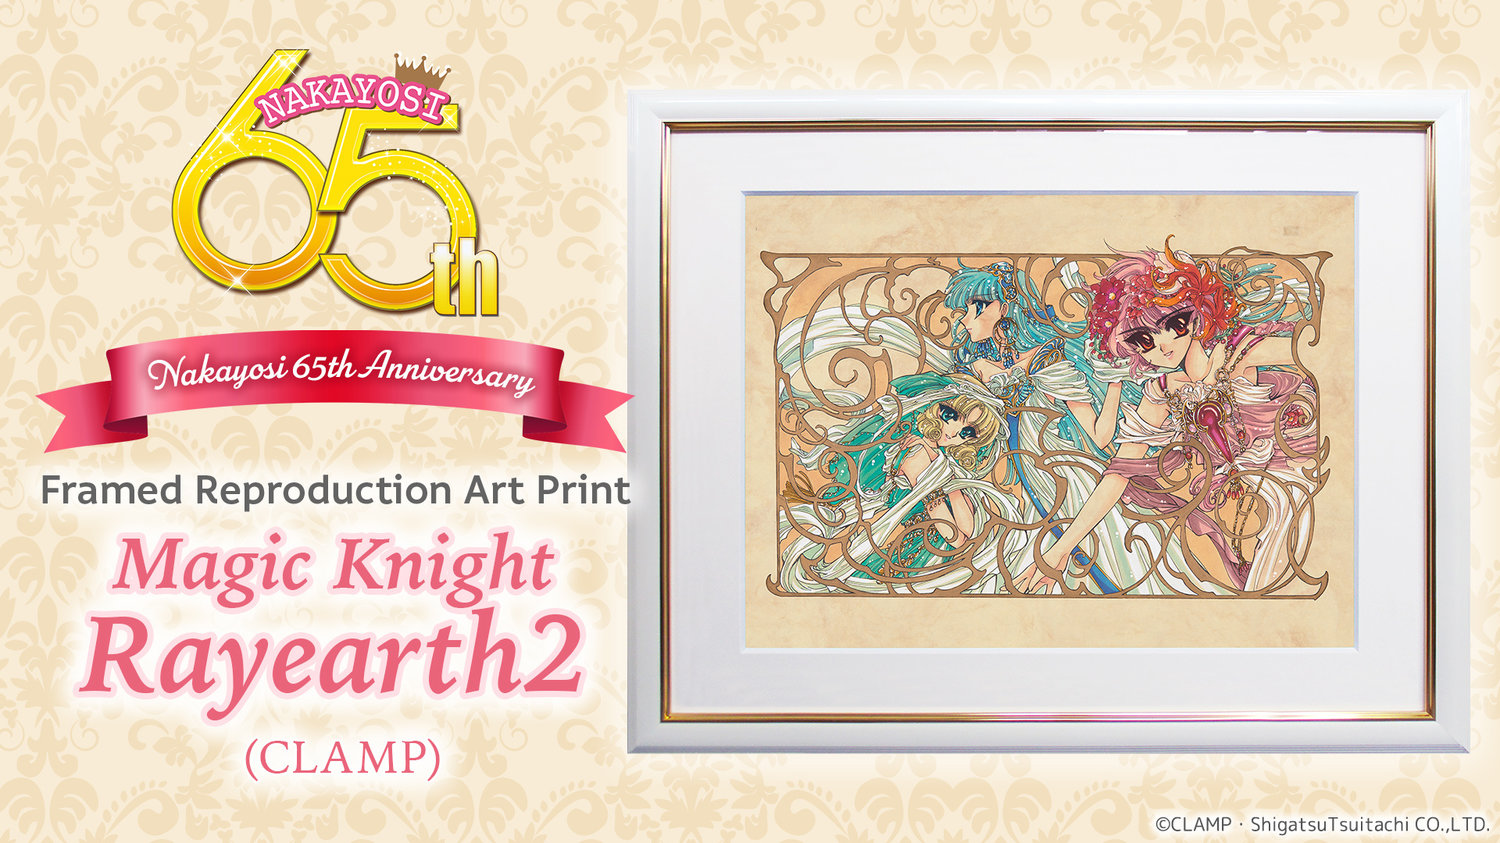 Nakayosi 65th Anniversary Framed Reproduction Art Print: Magic Knight Rayearth 2 (CLAMP)